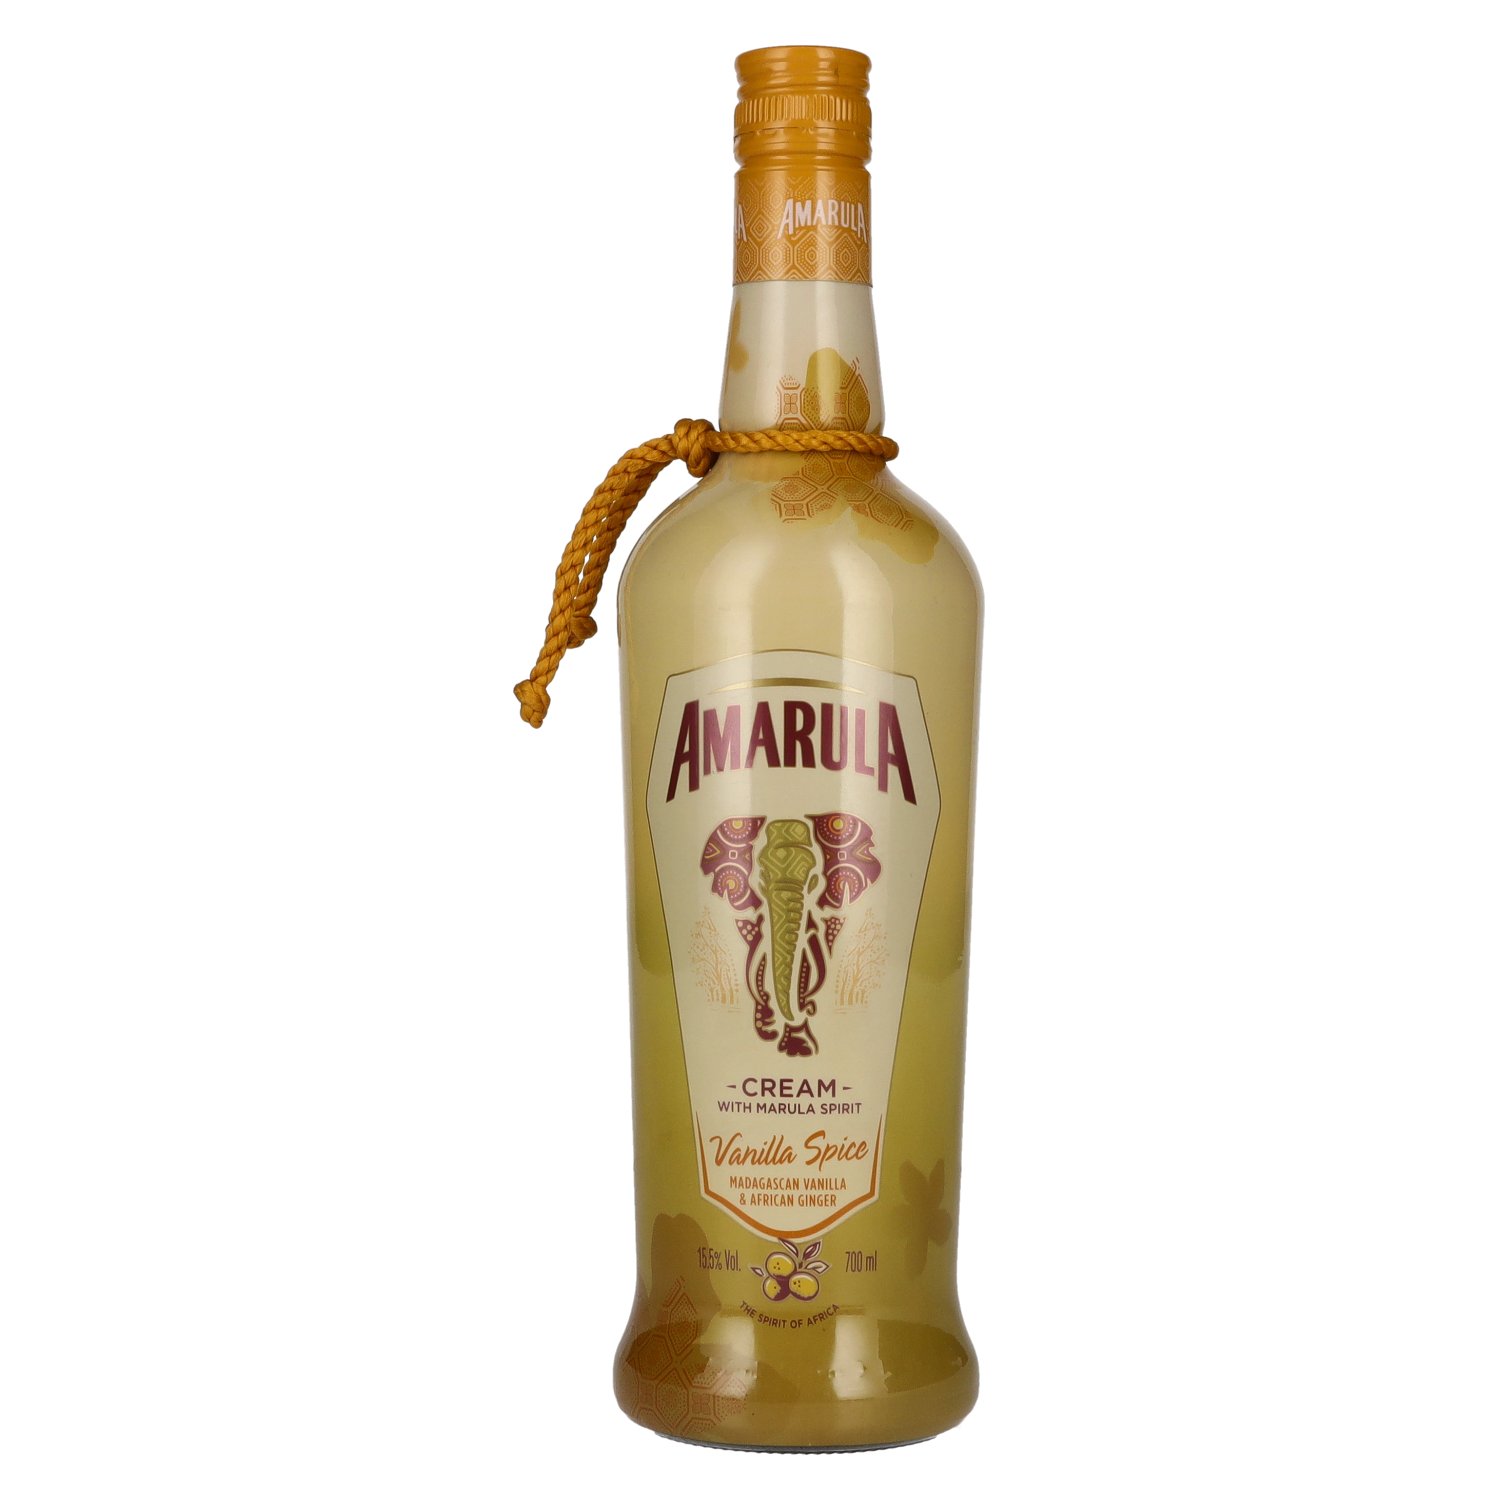 Amarula Vanilla Spice Cream delicando - 15,5% 0,7l Vol